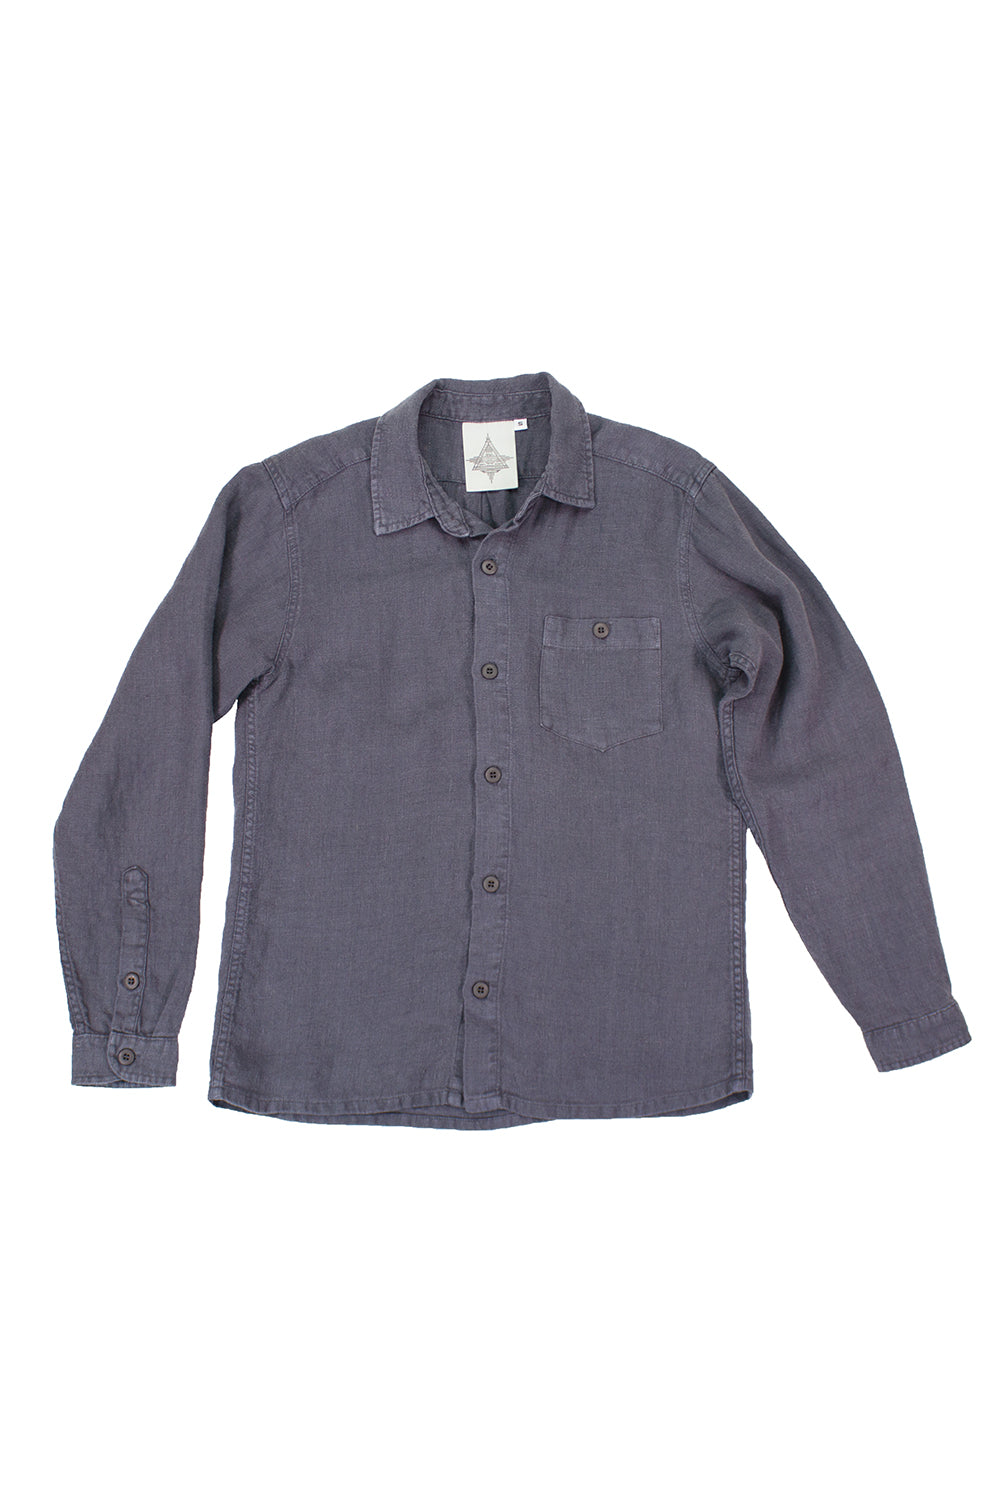 Lassen 100% Hemp Shirt | Jungmaven Hemp Clothing & Accessories / Color: Diesel Gray